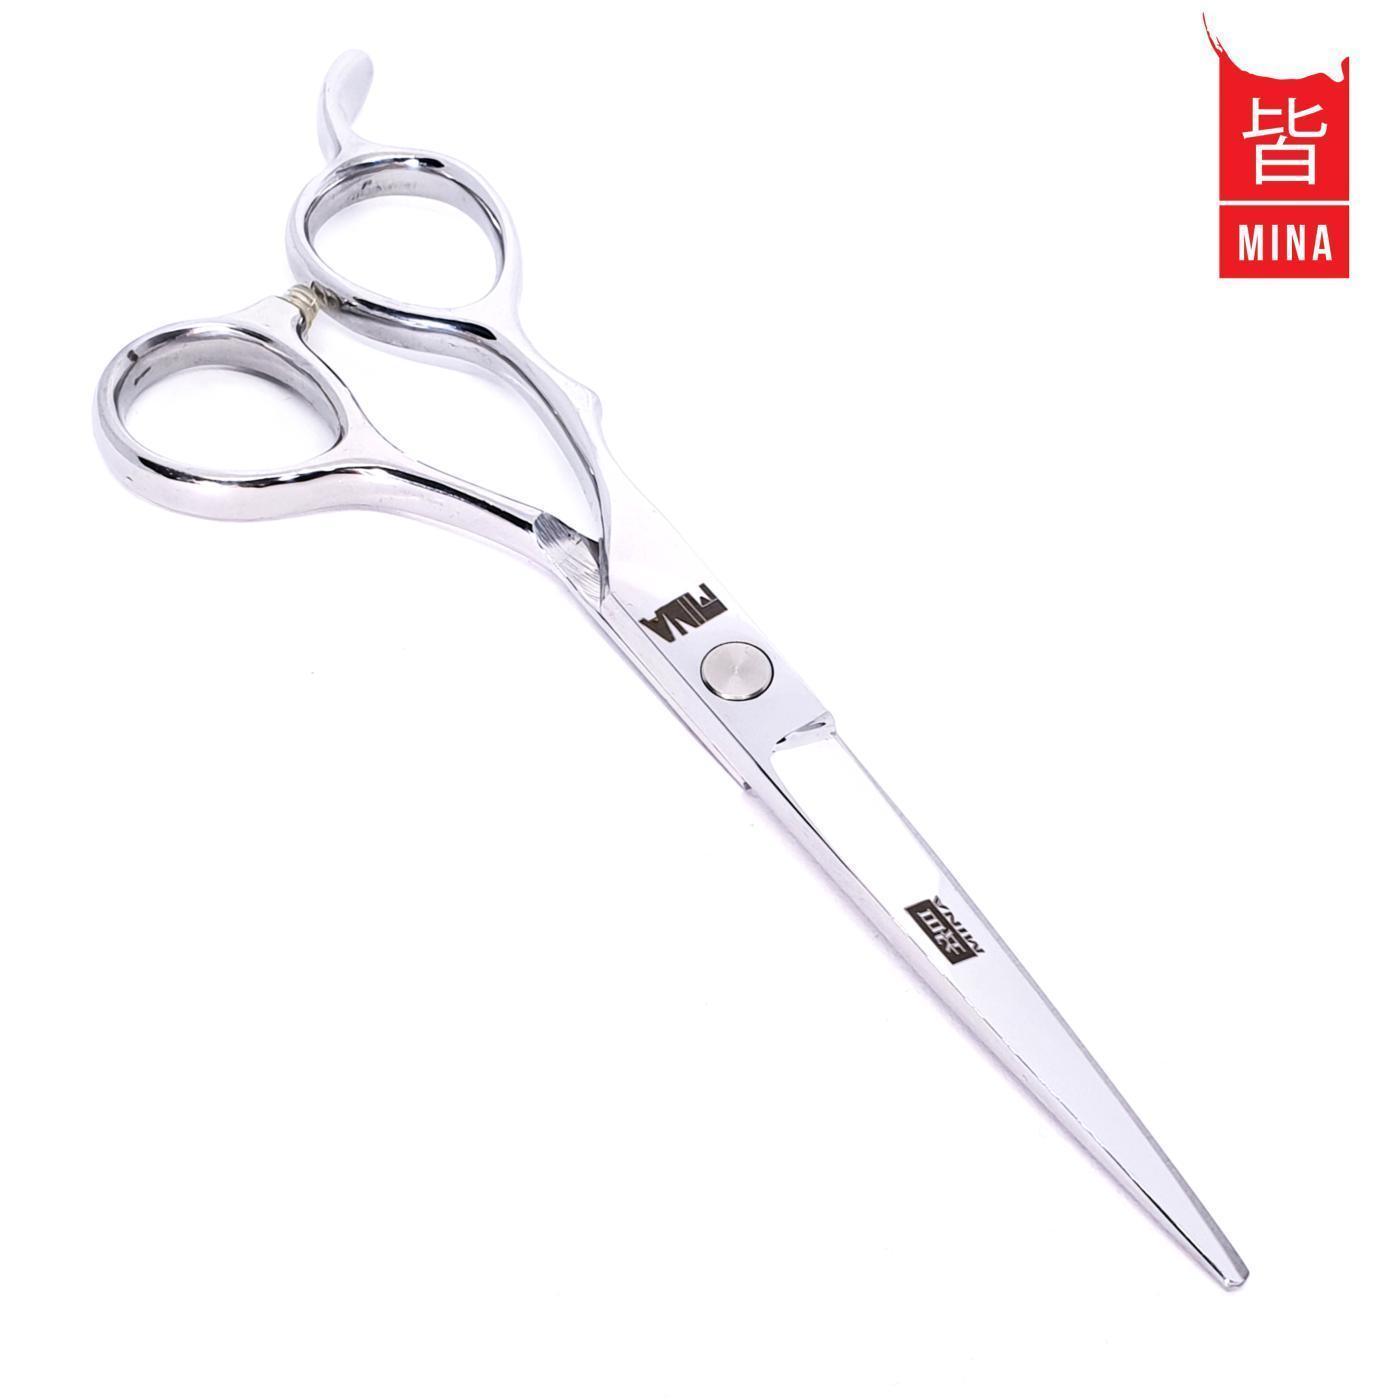 Mina Lefty Jay Cutting Scissors Set - Japan Scissors